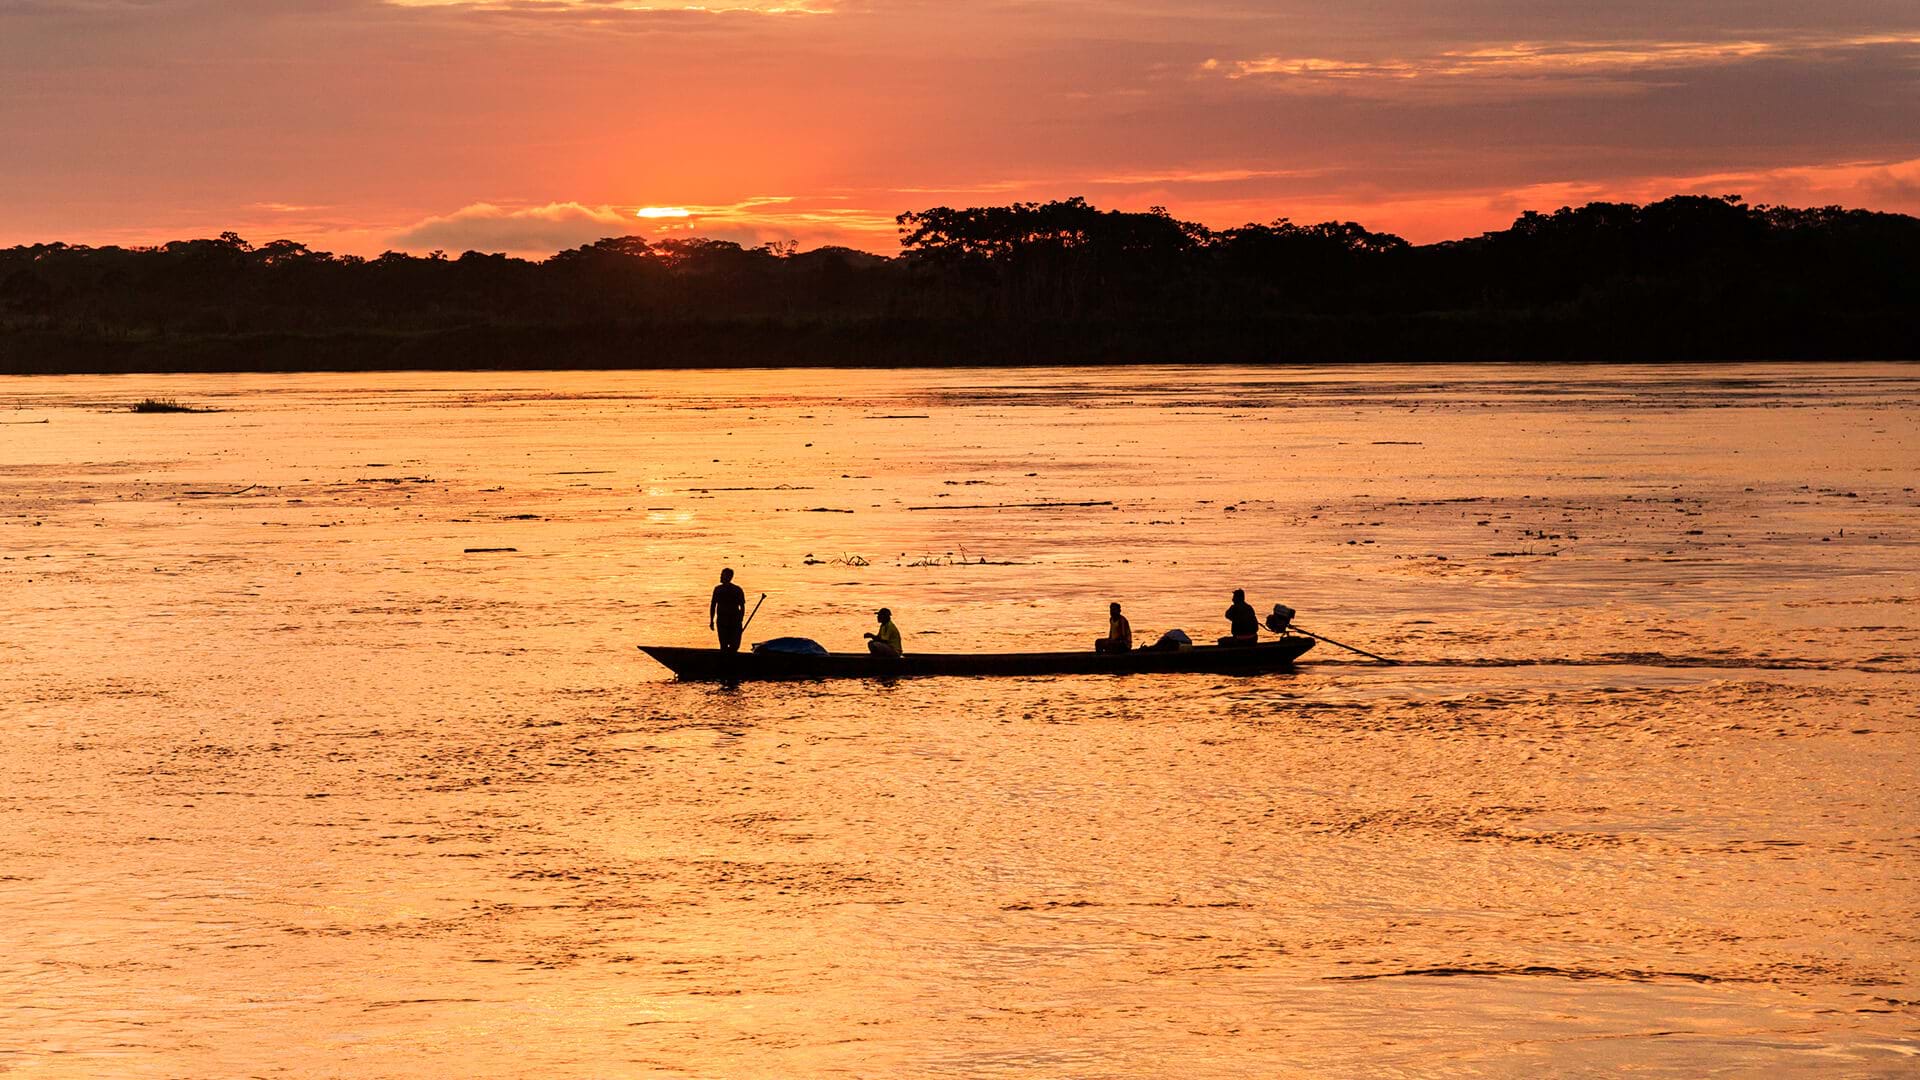 Discover The Secrets That The Amazon River Hides